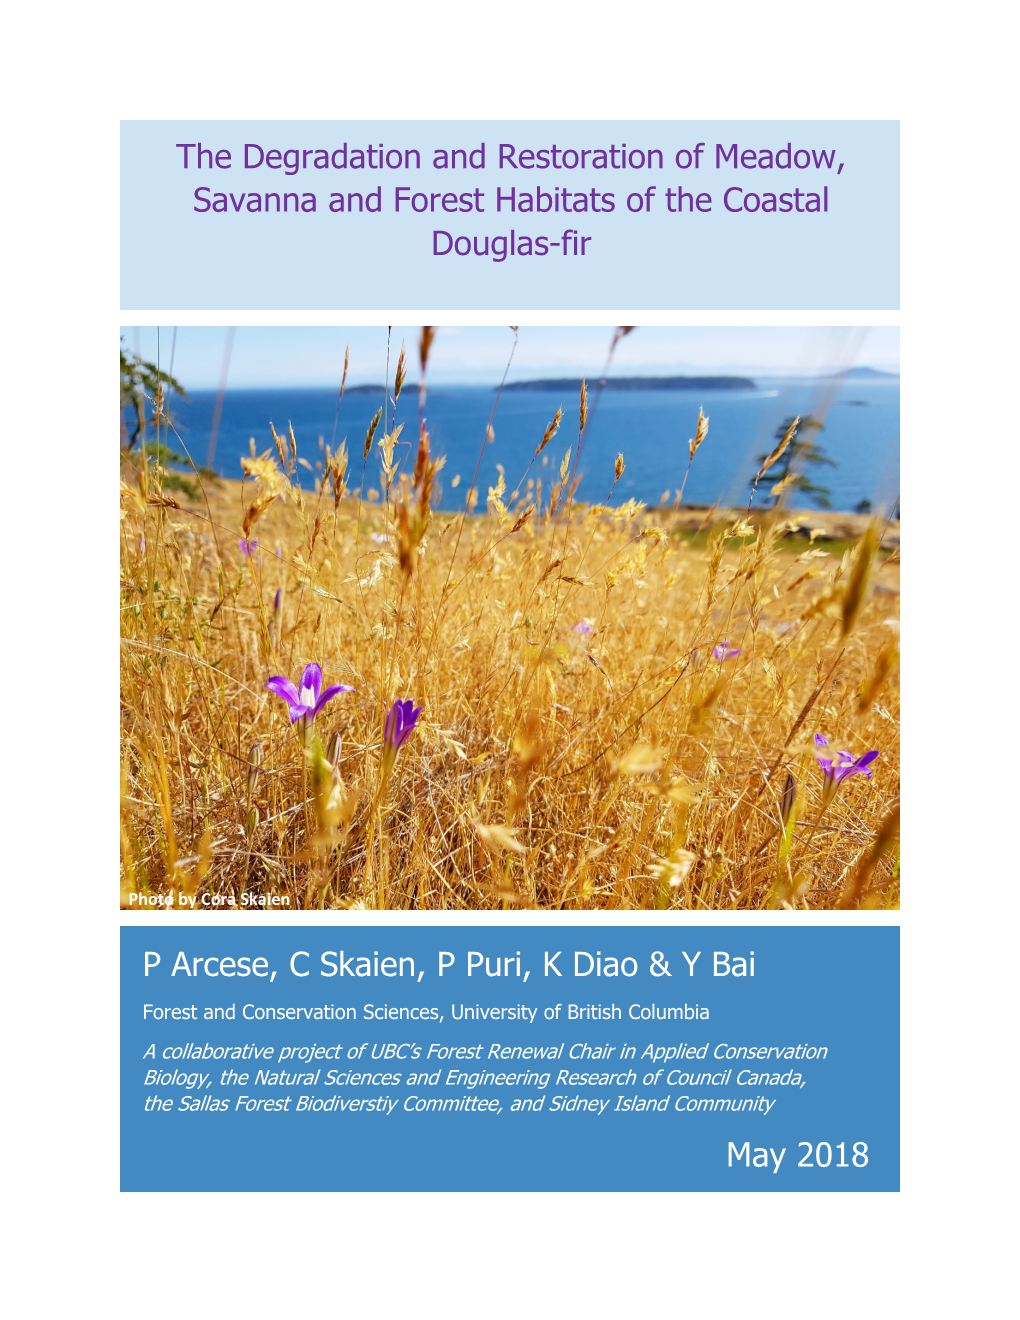 The Degradation and Restoration of Meadow, Savanna and Forest Habitats of the Coastal Douglas-Fir P Arcese, C Skaien, P Puri, K